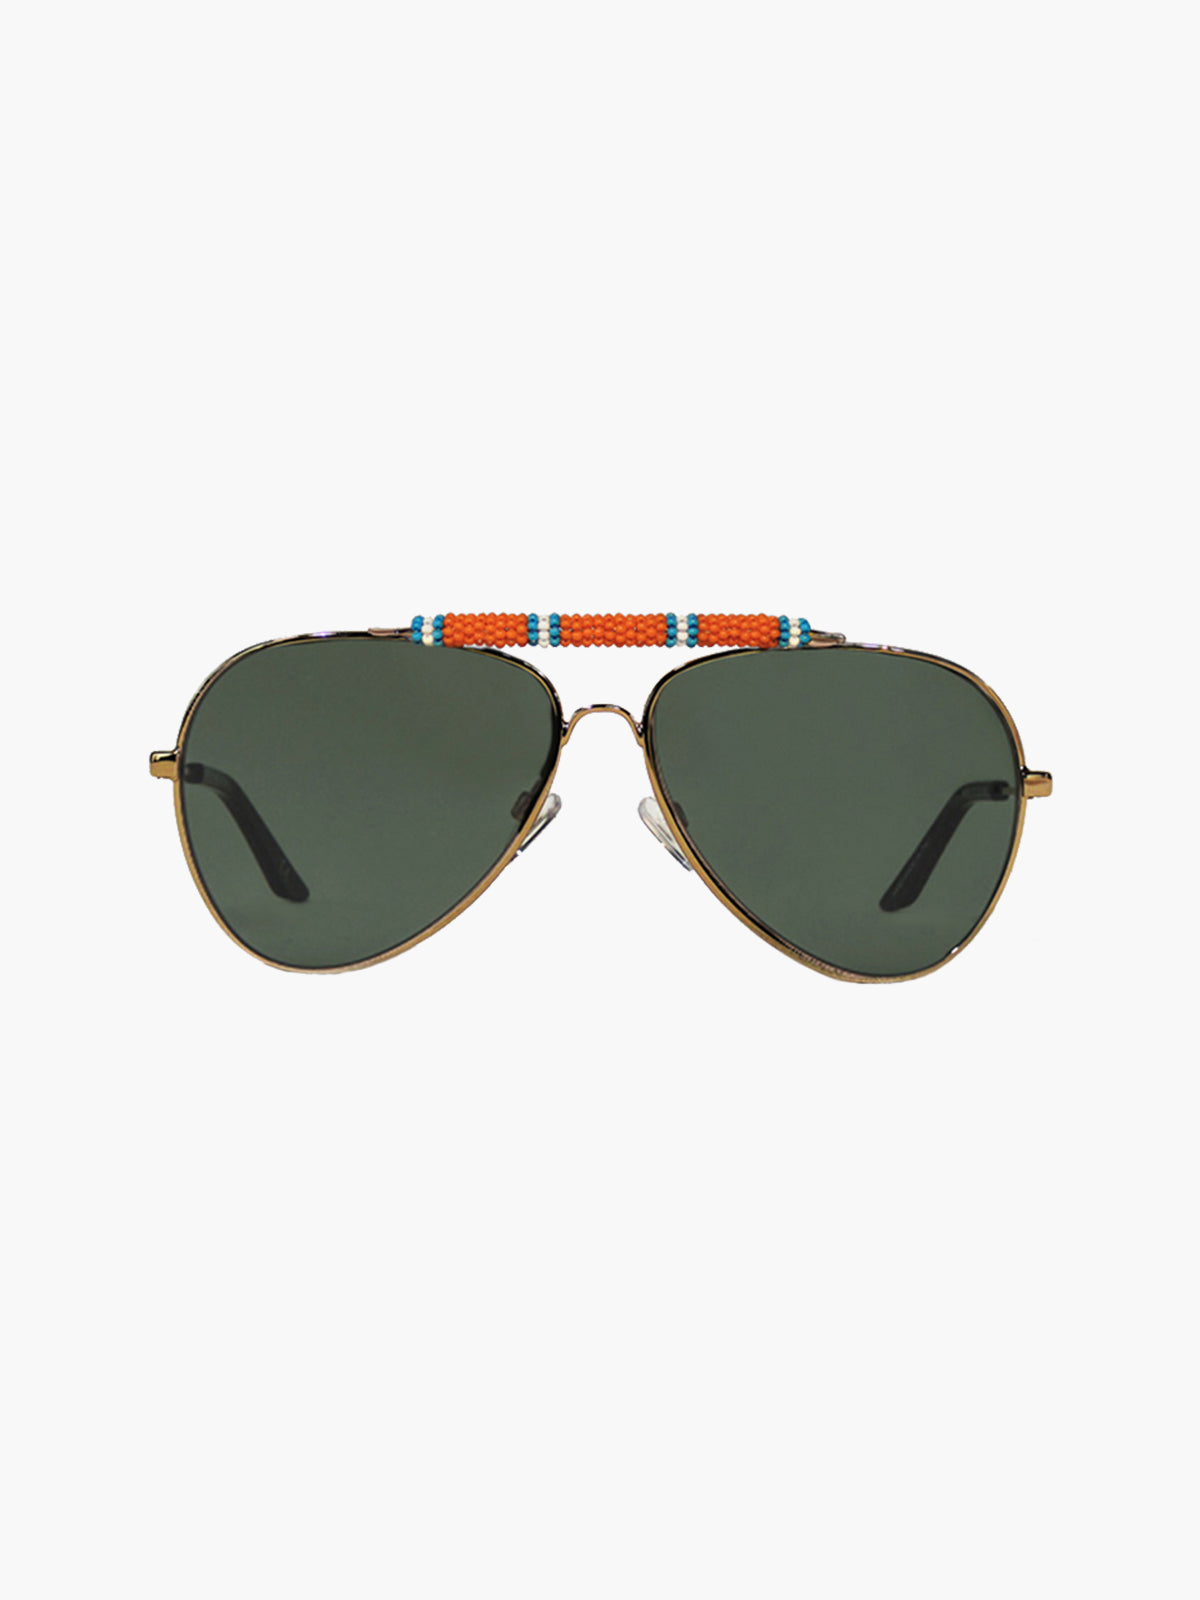 Exclusive Sunglasses | Orange/Turquoise - Fashionkind